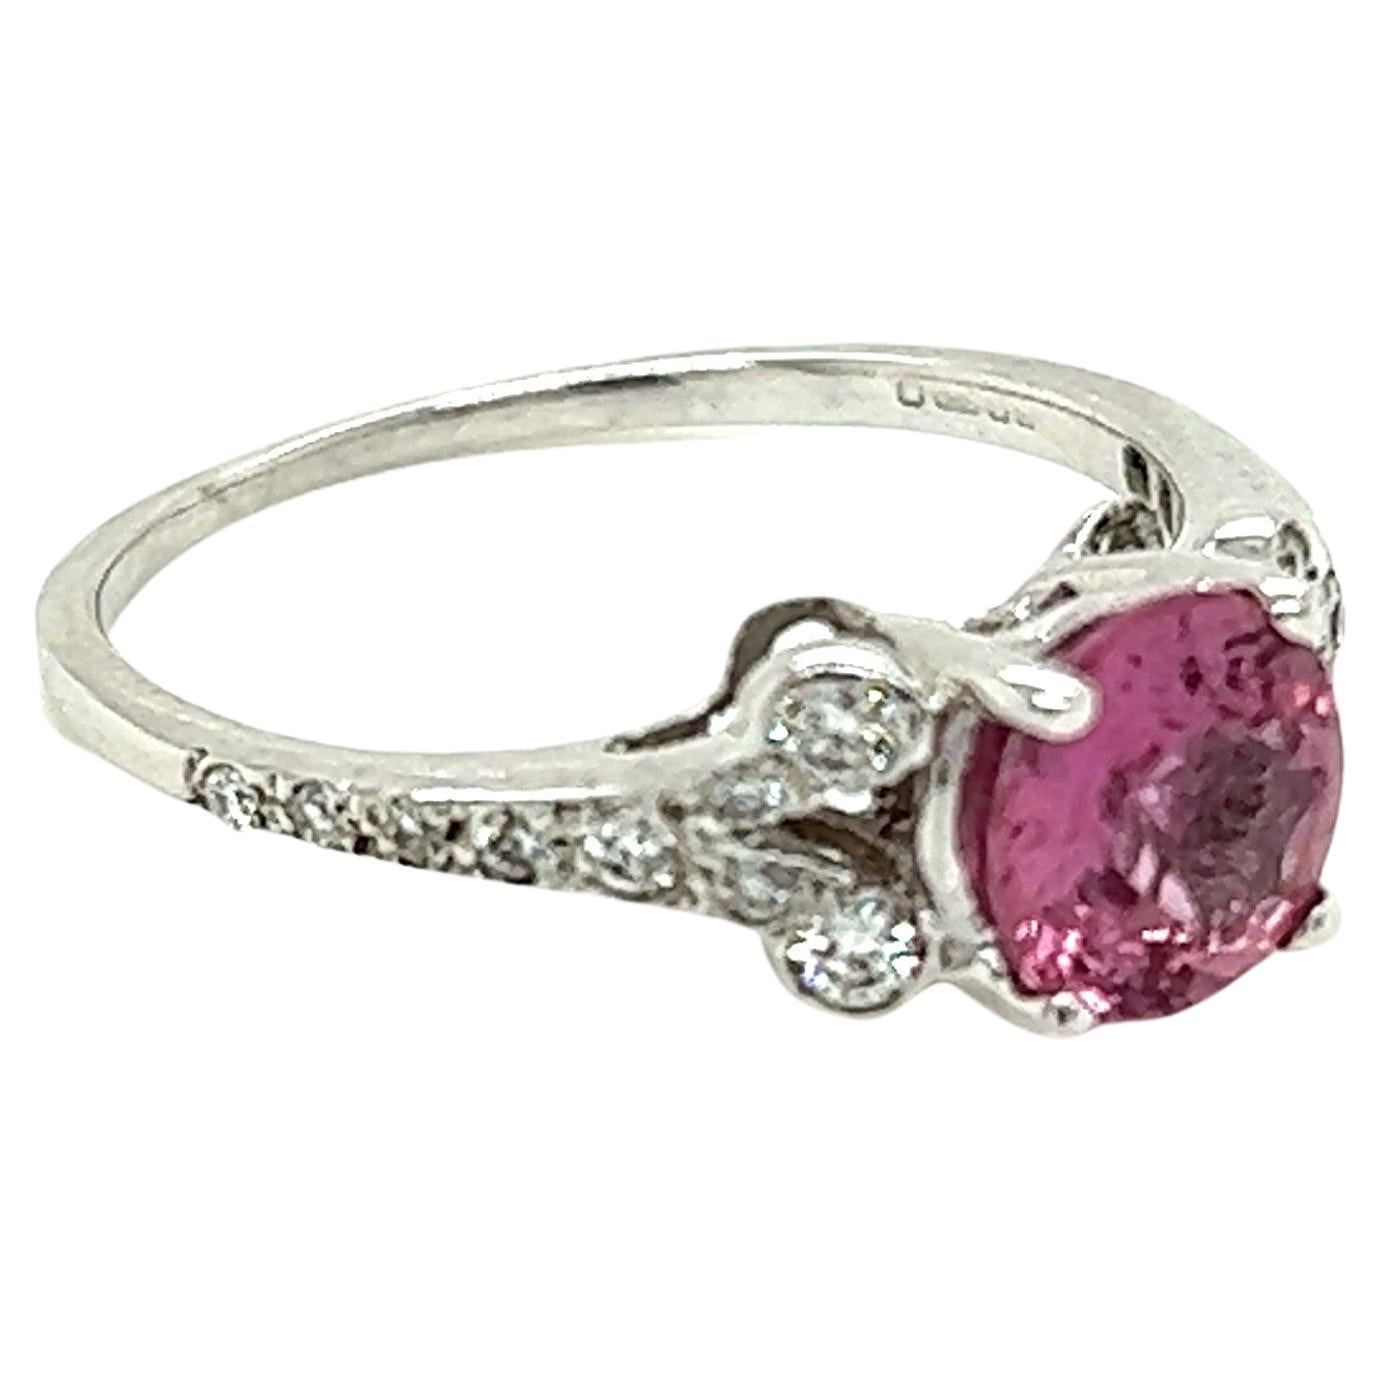 1.29 Carat Round Pink Sapphire and Diamond Ring in 18 Karat White Gold